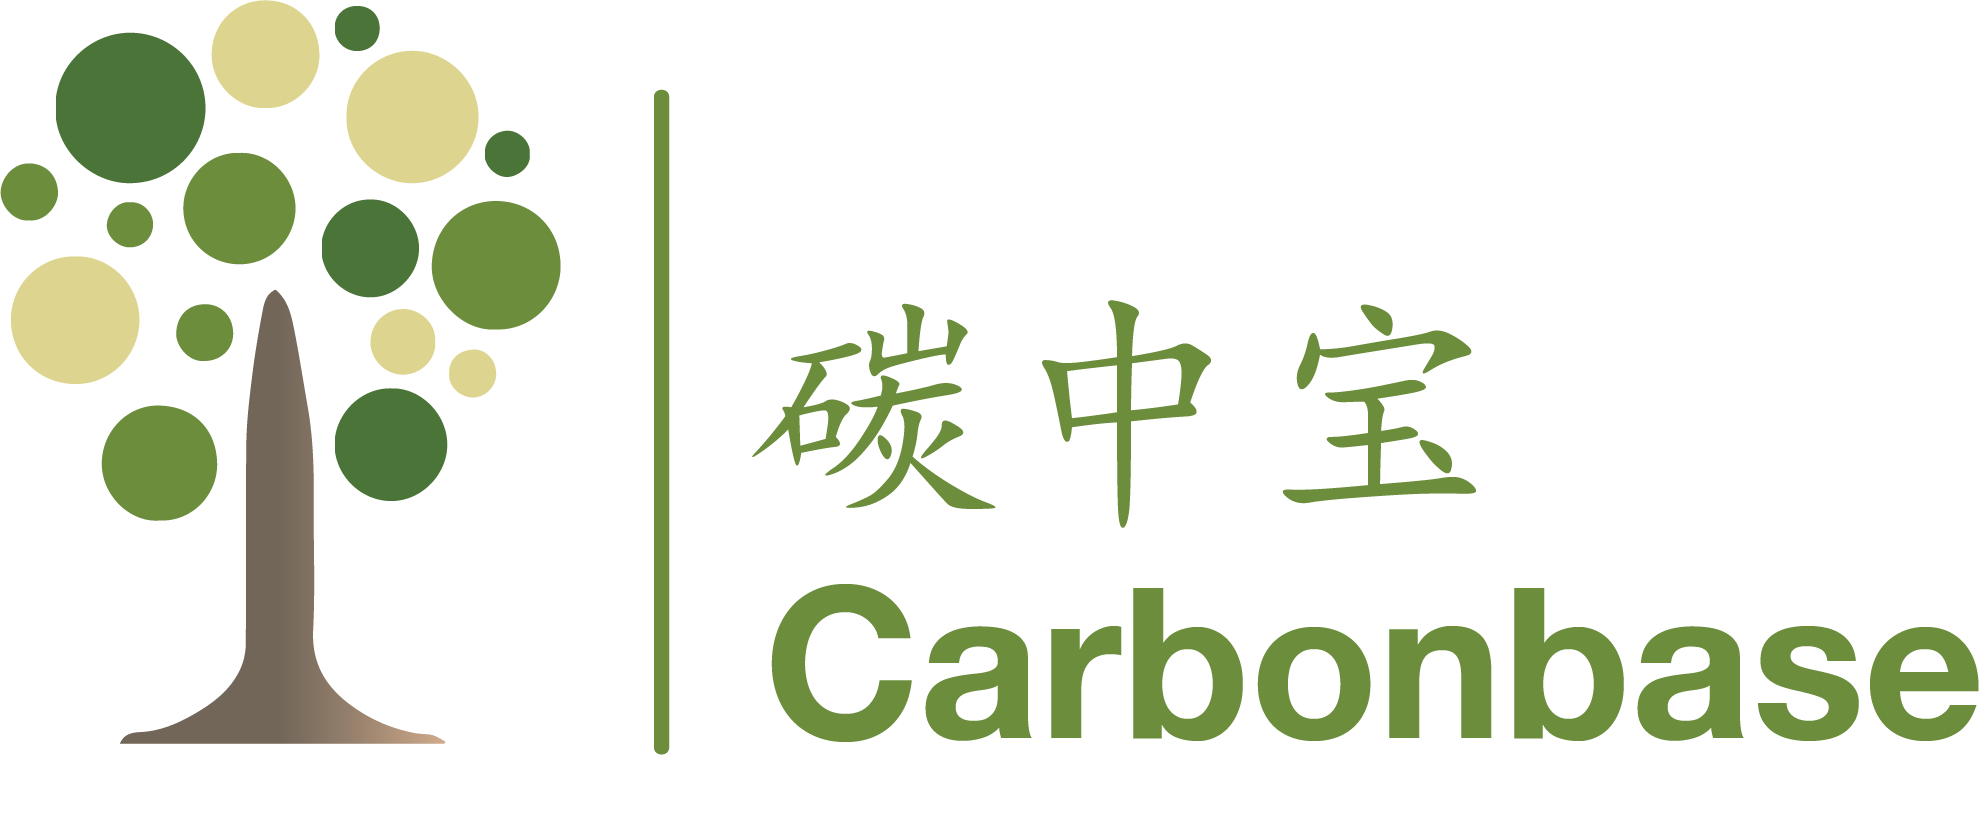 Carbonbase + Logo (中英)